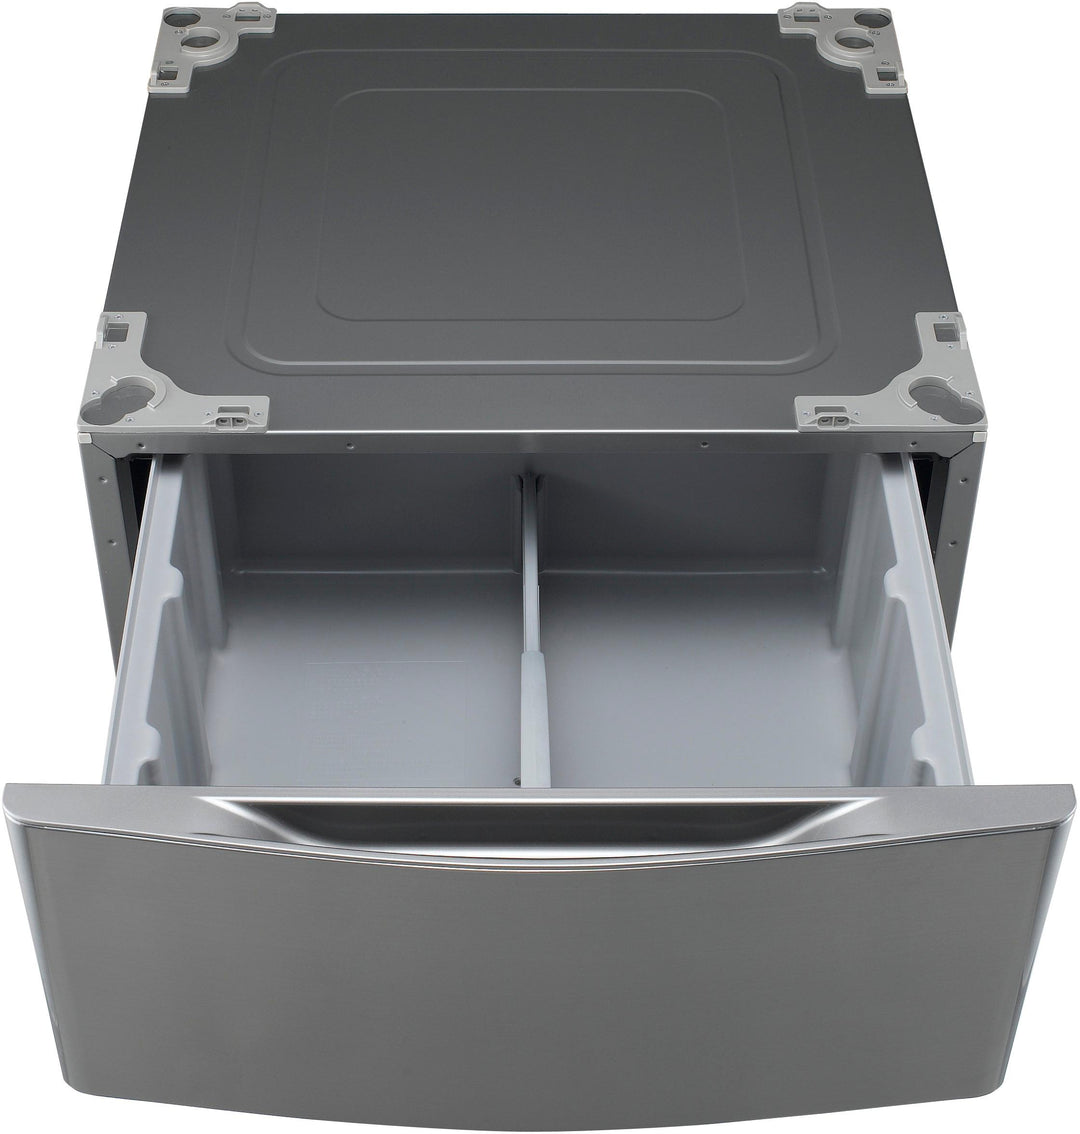 LG - 27" Laundry Pedestal with Storage Drawer - Graphite steel_0